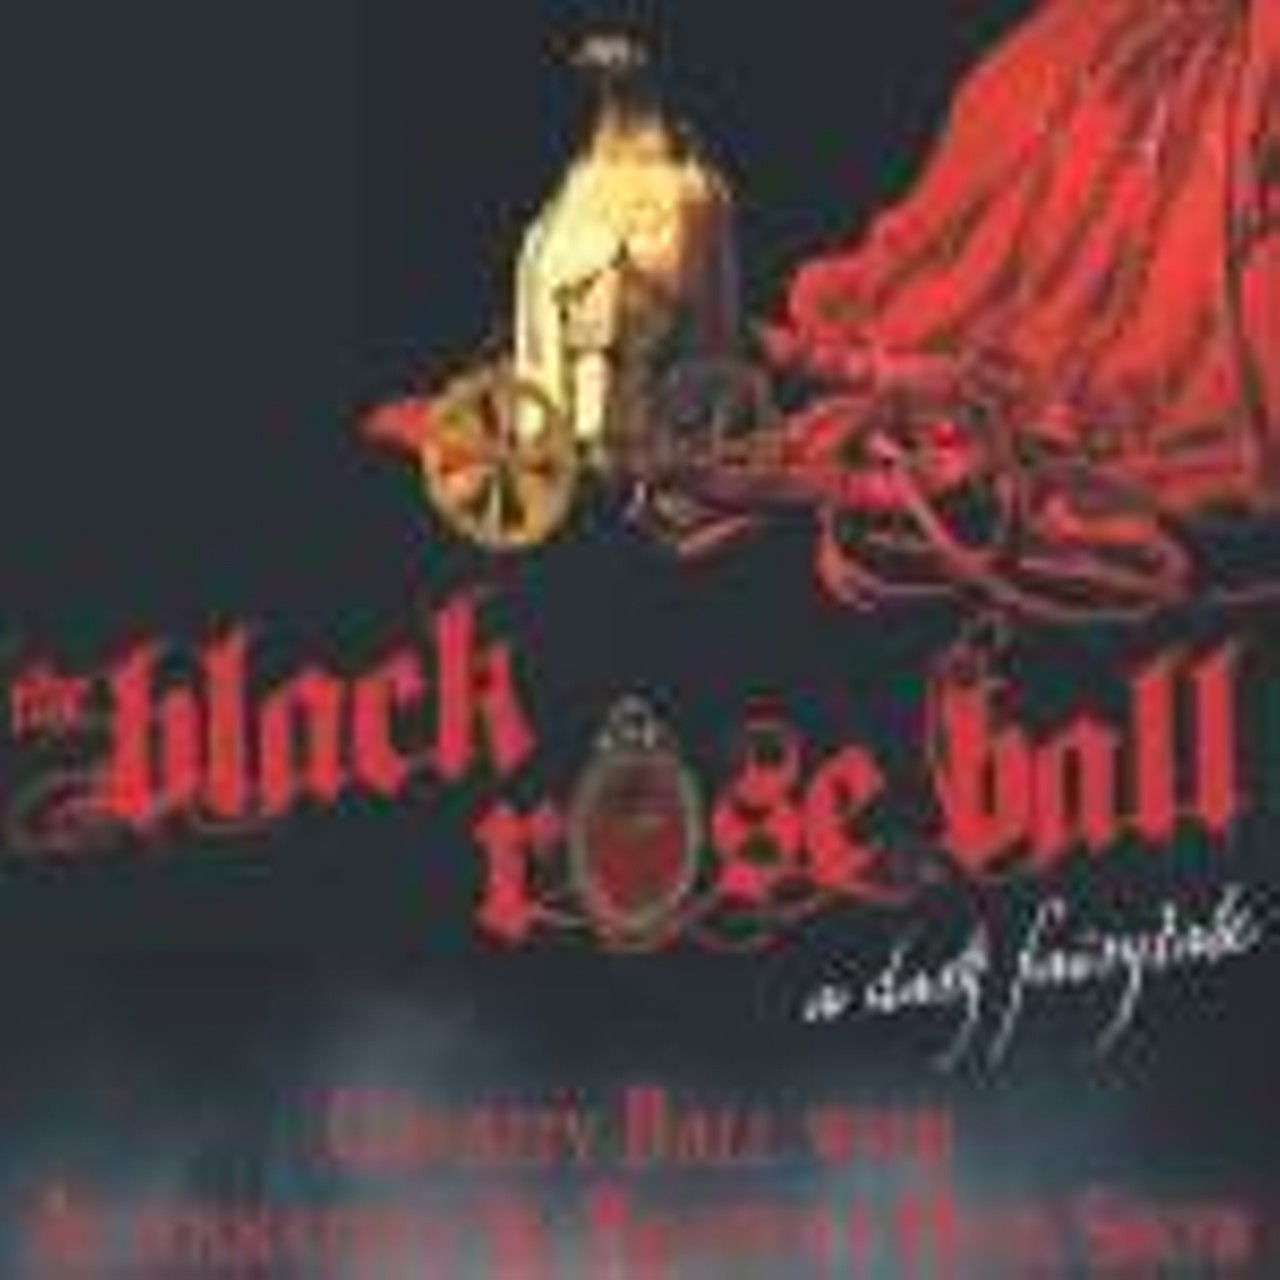 Black Rose Ball